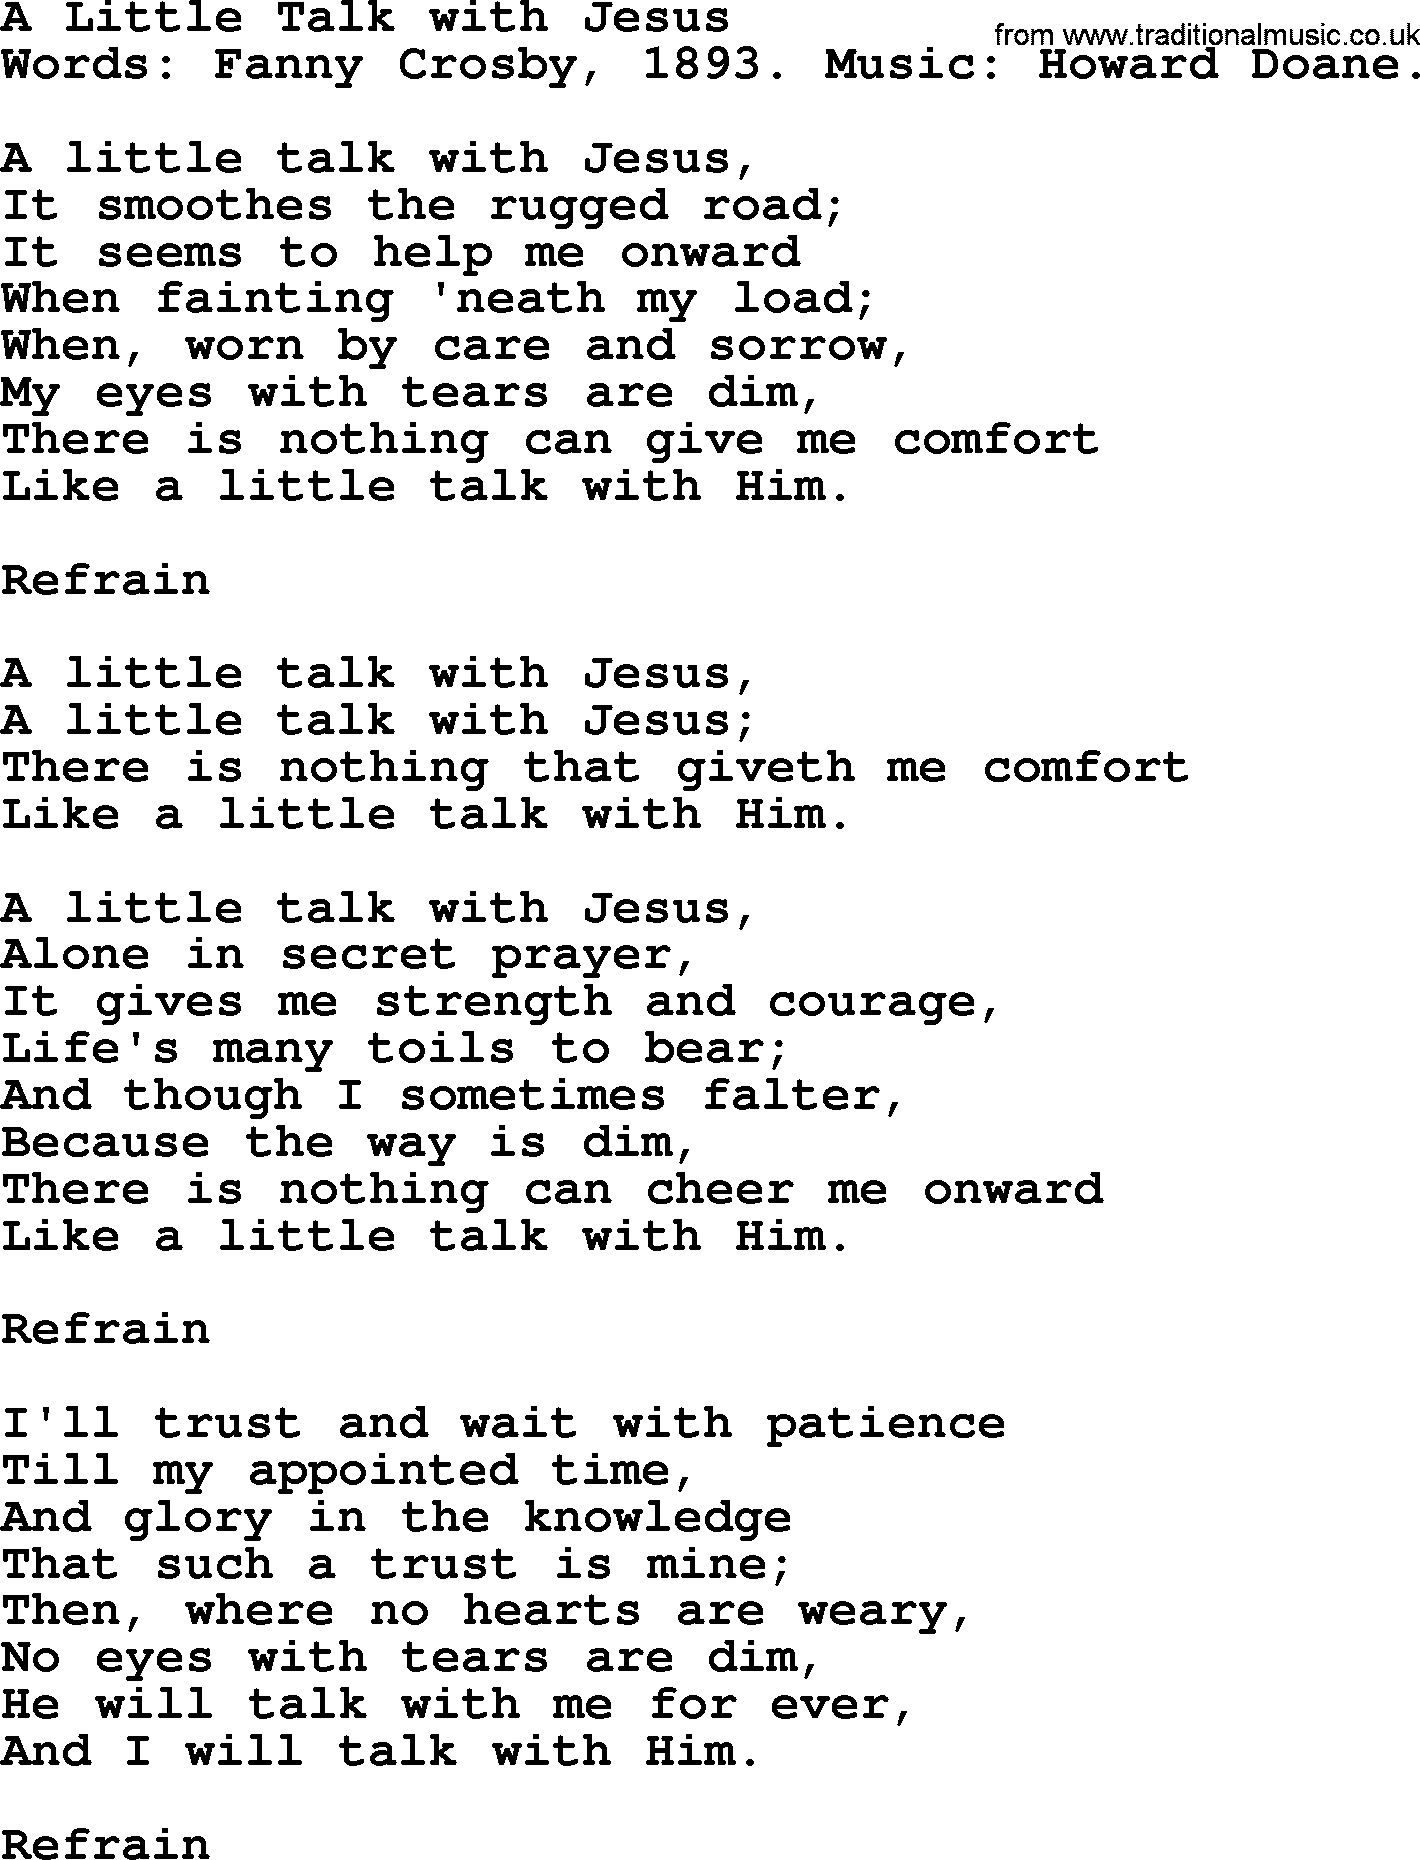 Fanny Crosby song: A Little Talk With Jesus, lyrics